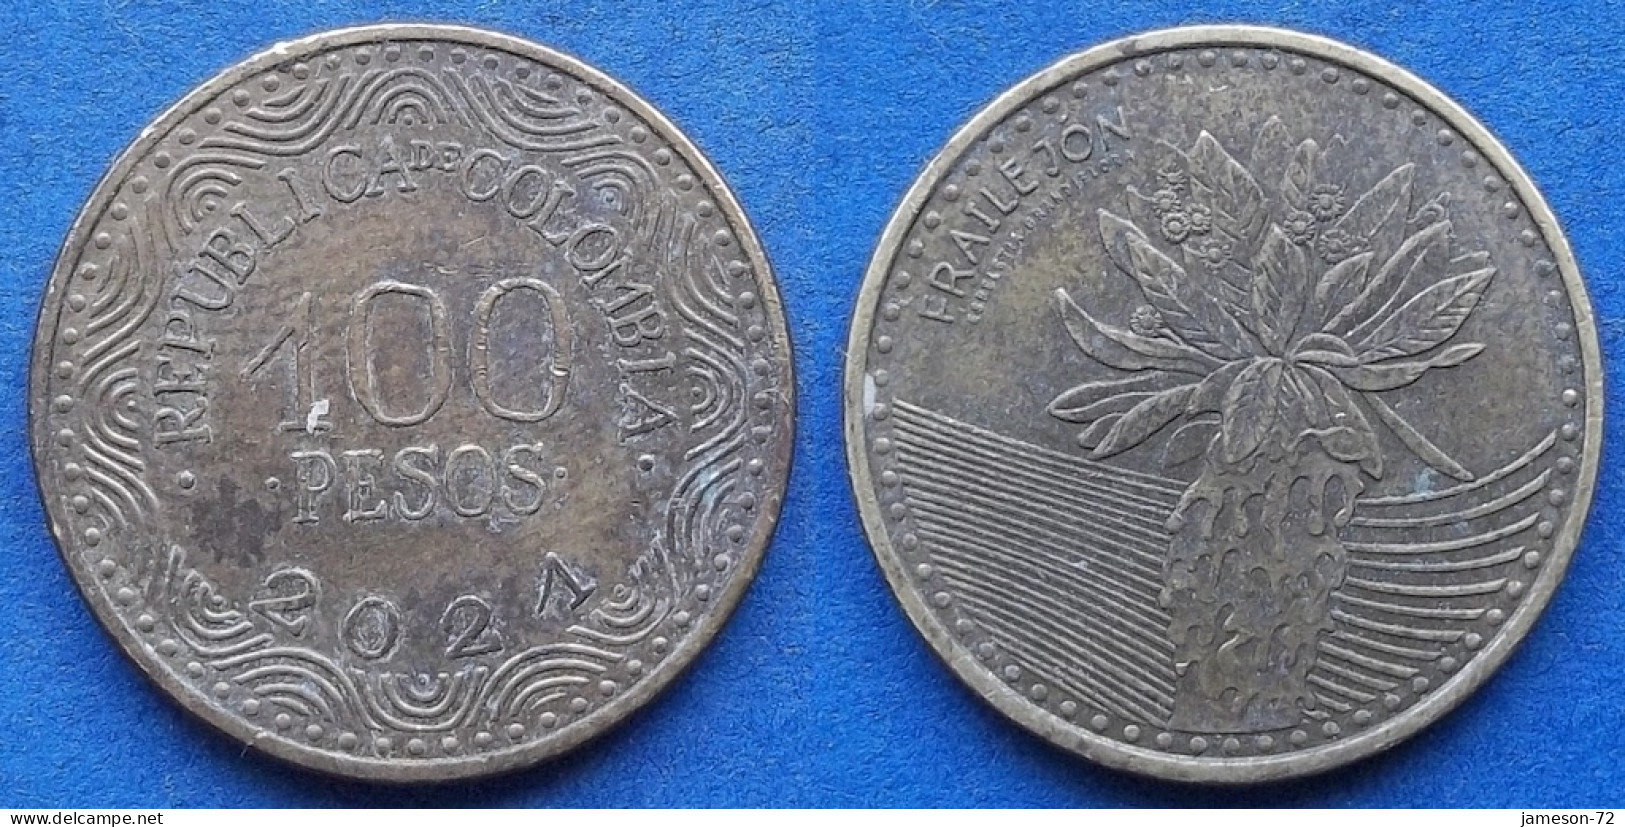 COLOMBIA - 100 Pesos 2021 "Frailejon" KM# 296 Republic - Edelweiss Coins - Colombia